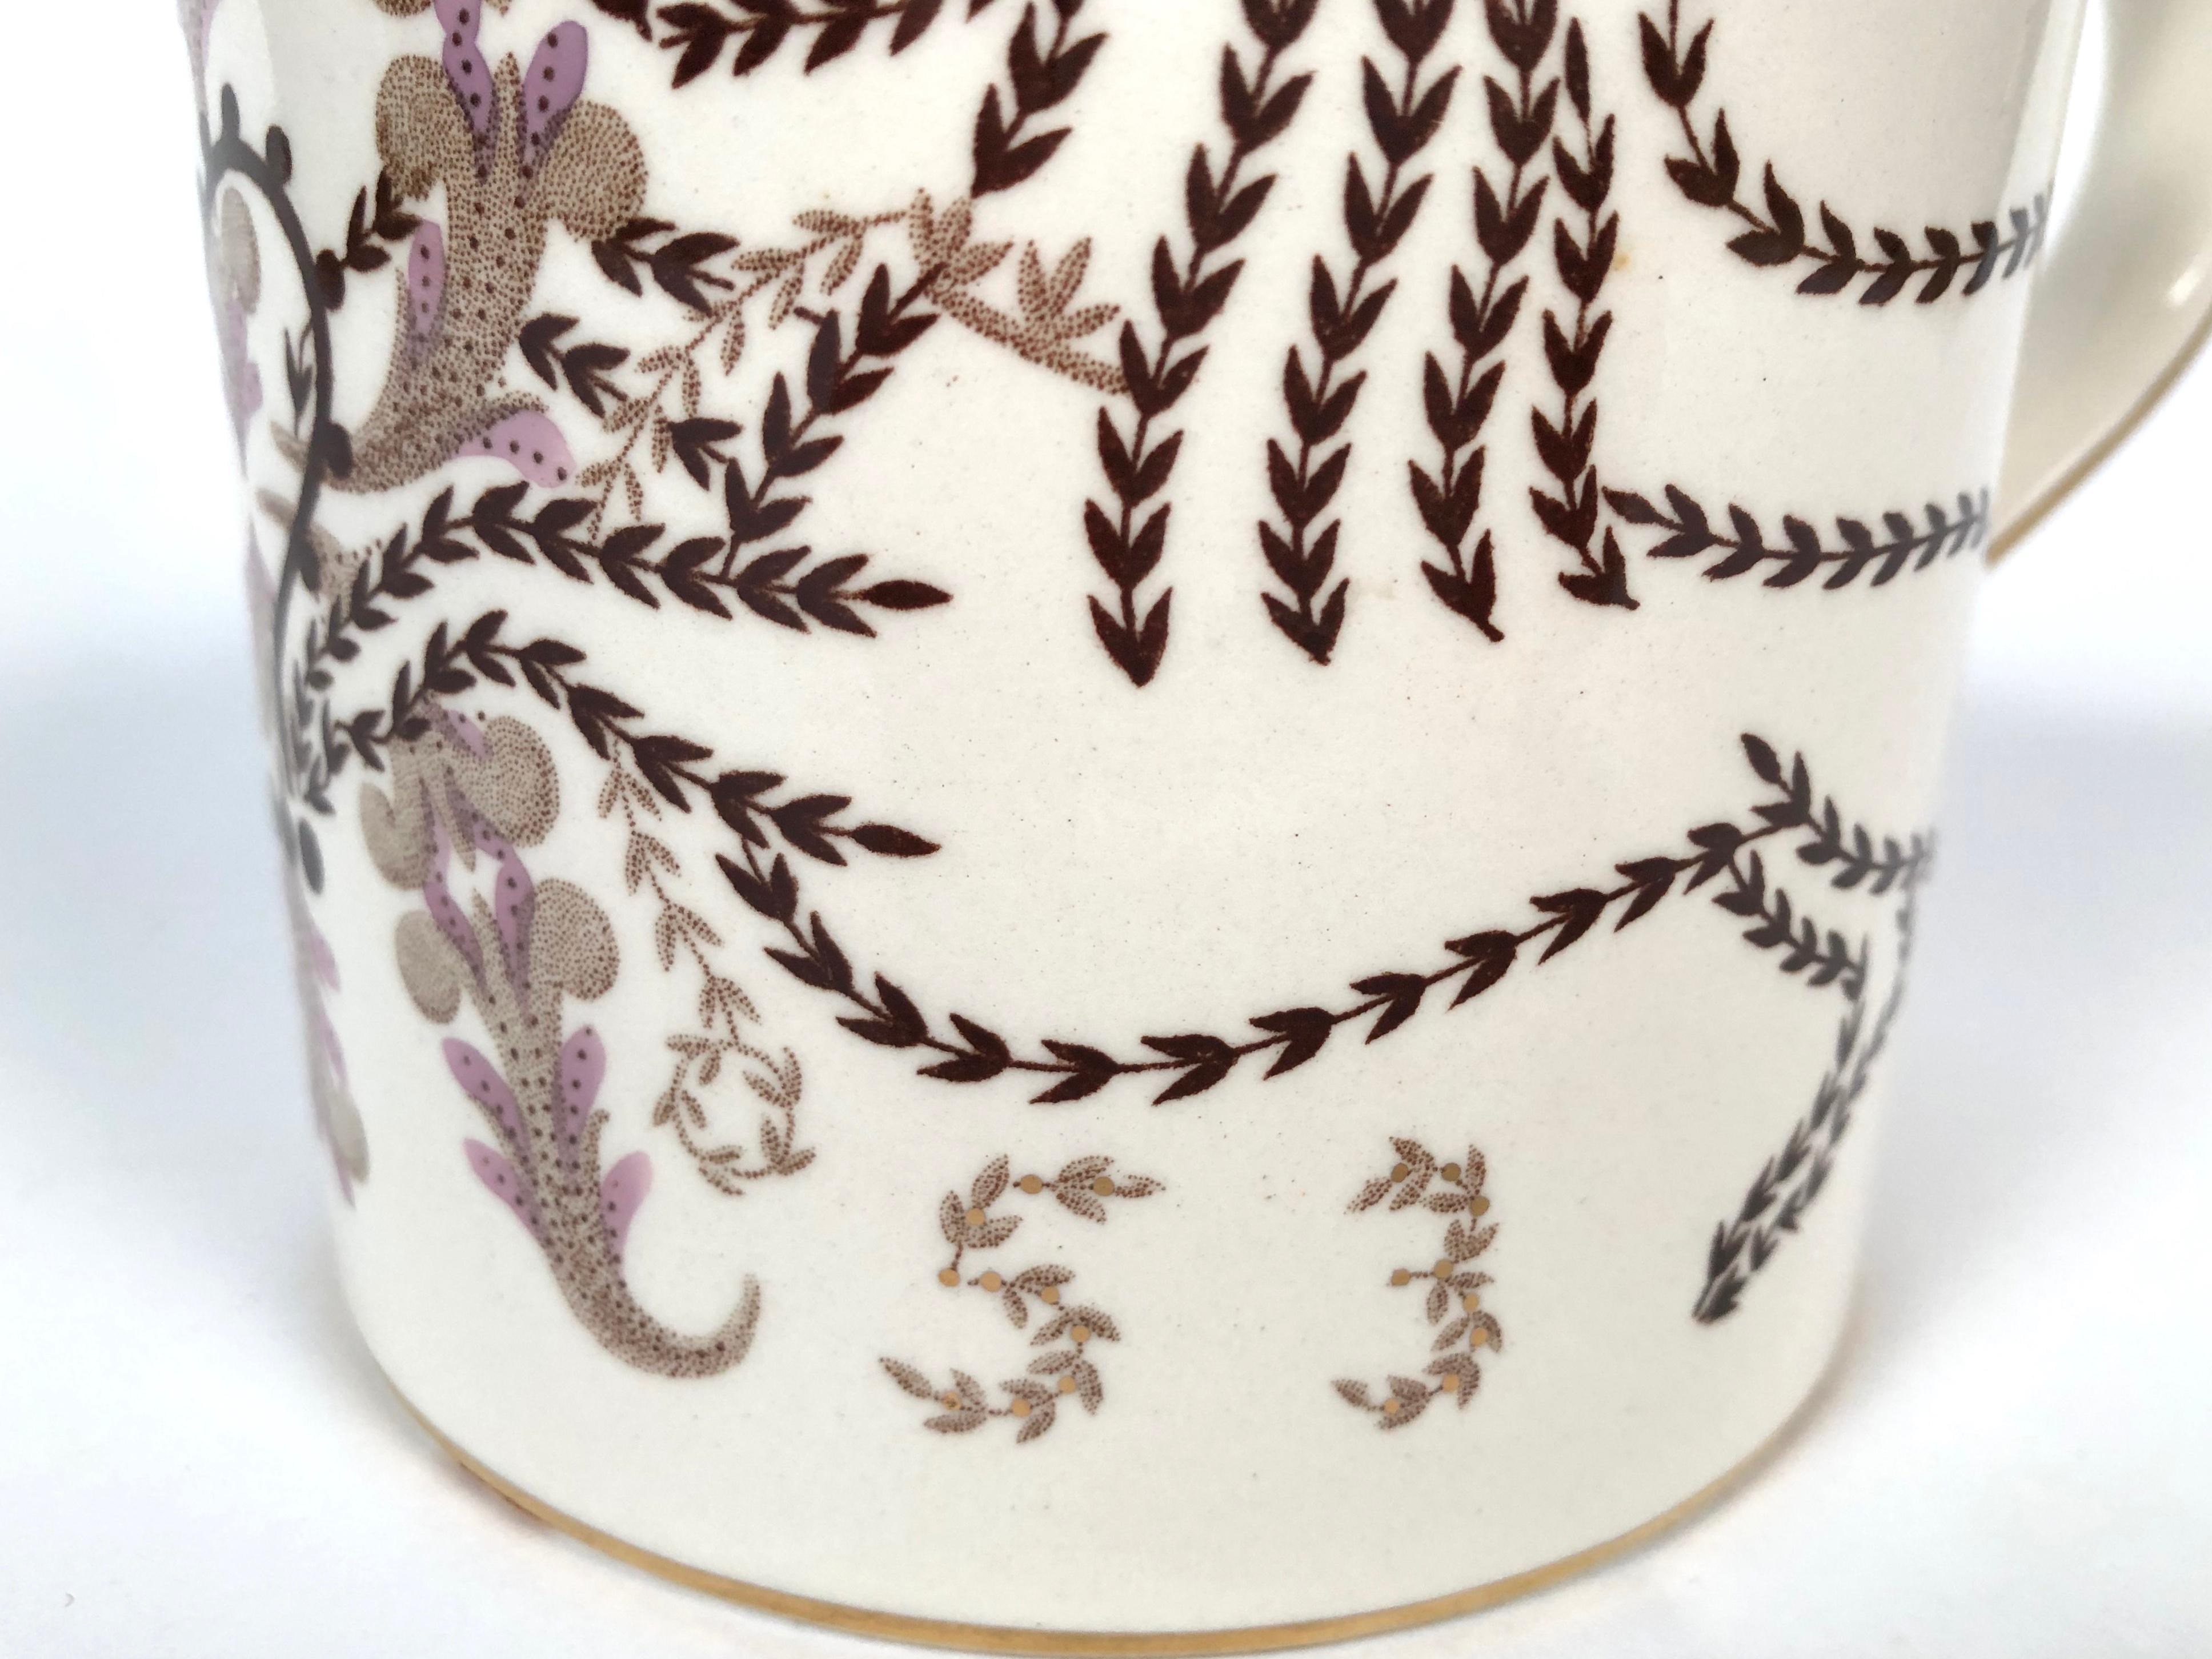 Mid-Century Modern Queen Elizabeth II Commemorative Coronation Mug by Richard Guyatt for Wedgwood